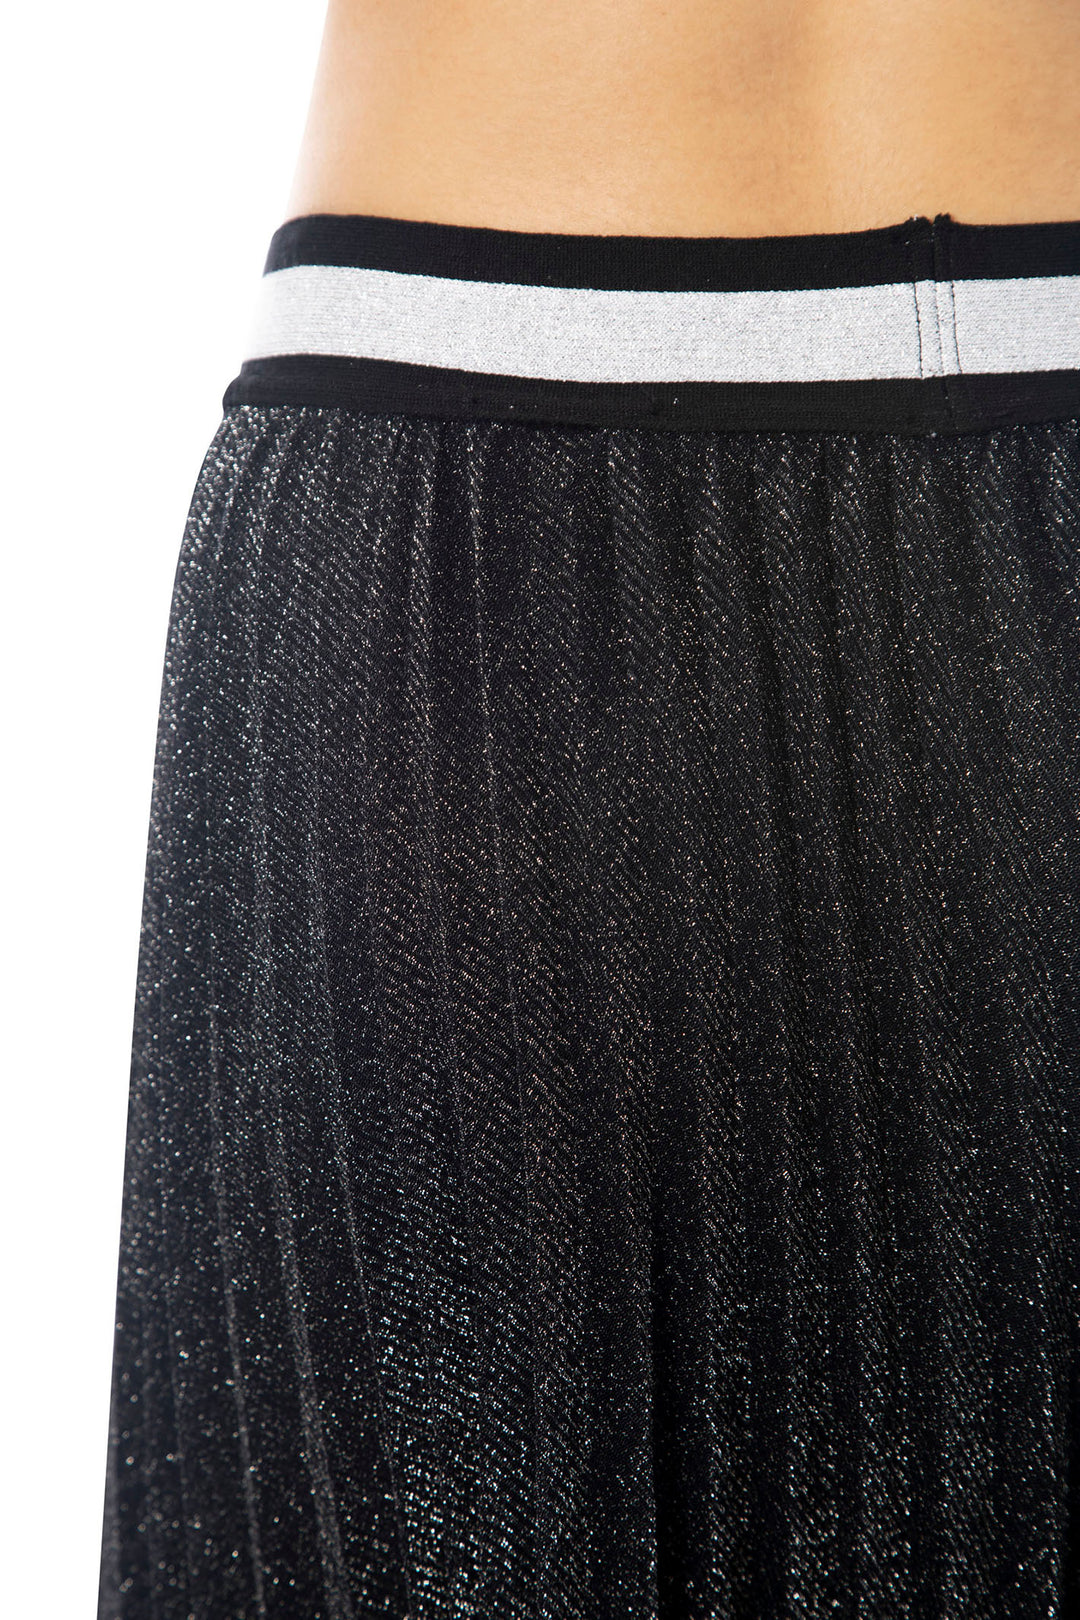 Elisa Cavaletti EJP243046900 Black Layered Skirt - Experience Boutique